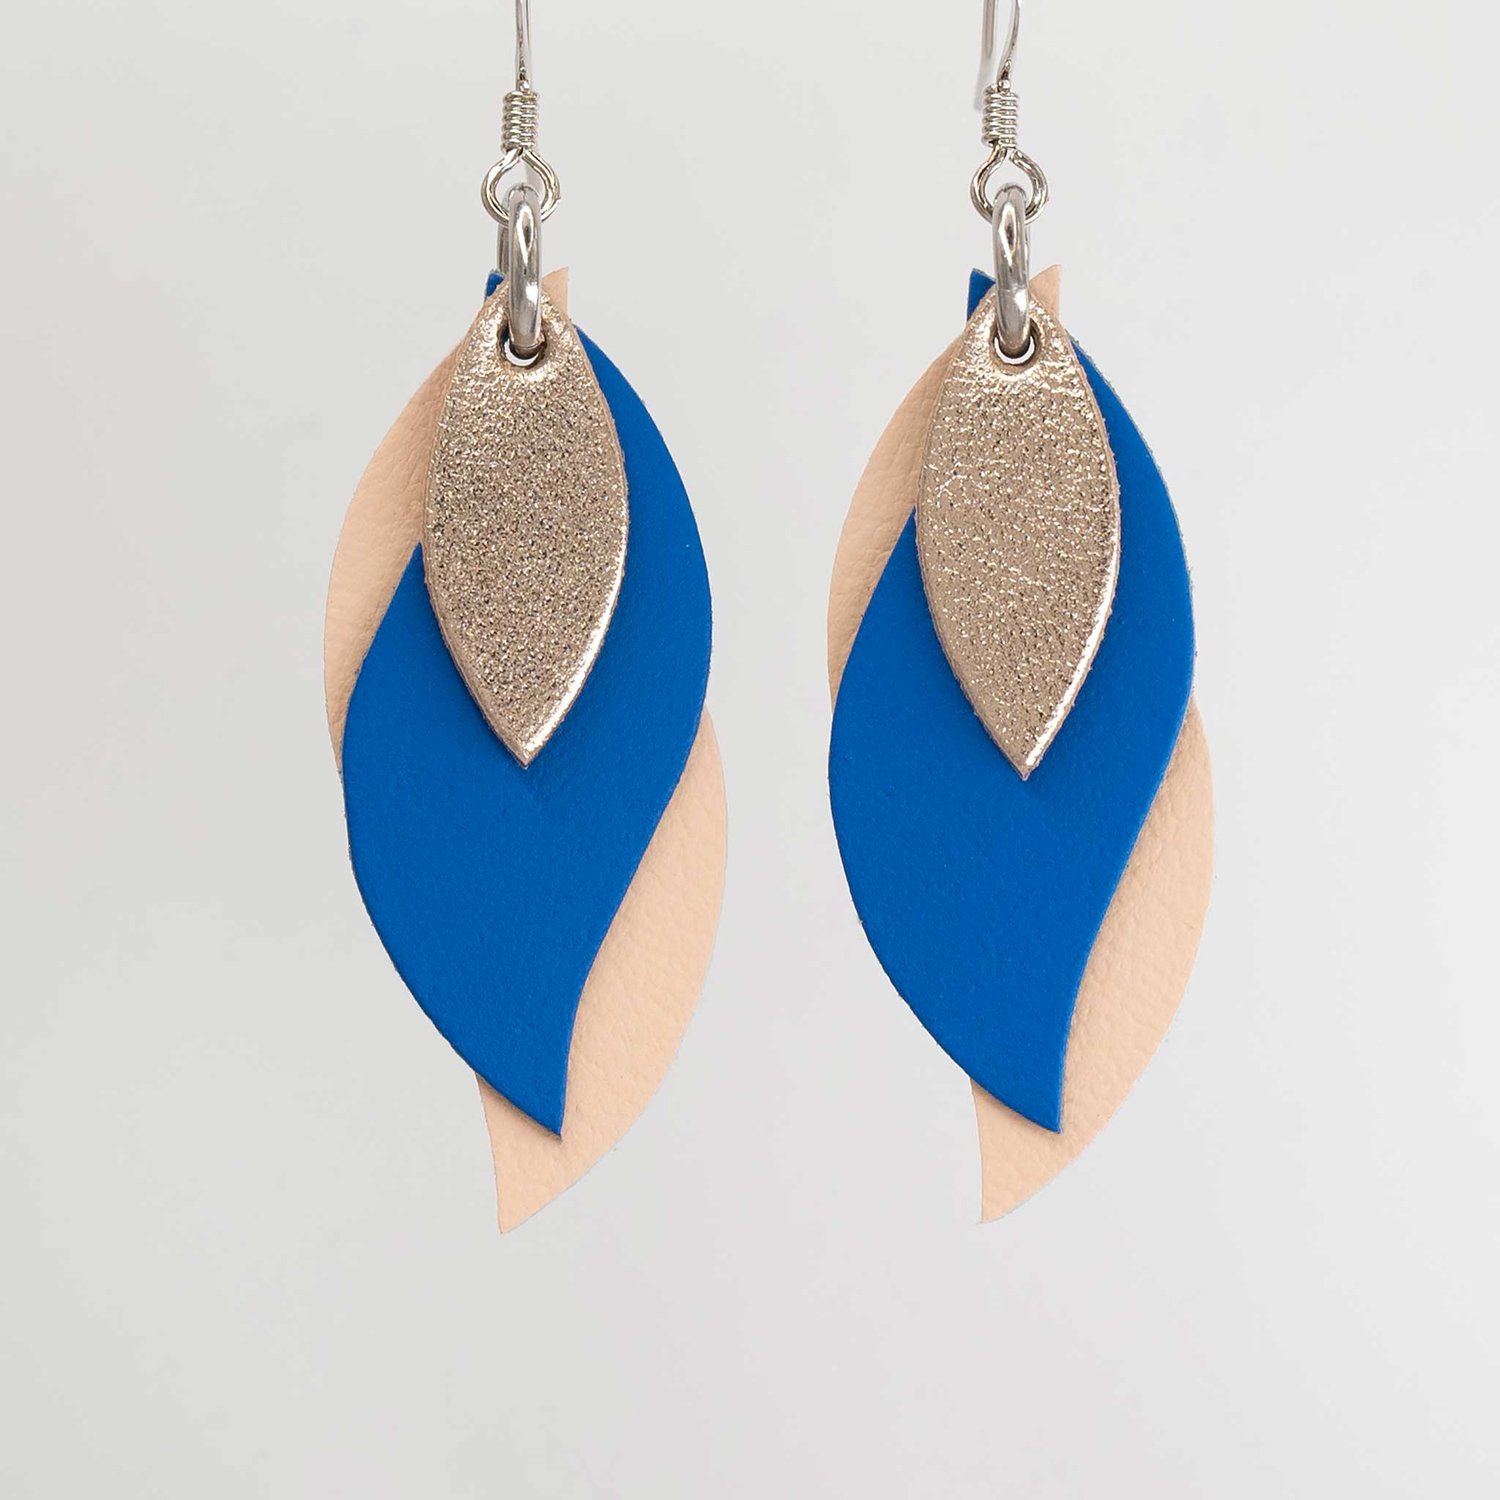 Image of Australian leather leaf earrings - Rose gold, cobalt blue, pale peach [LBC-705]